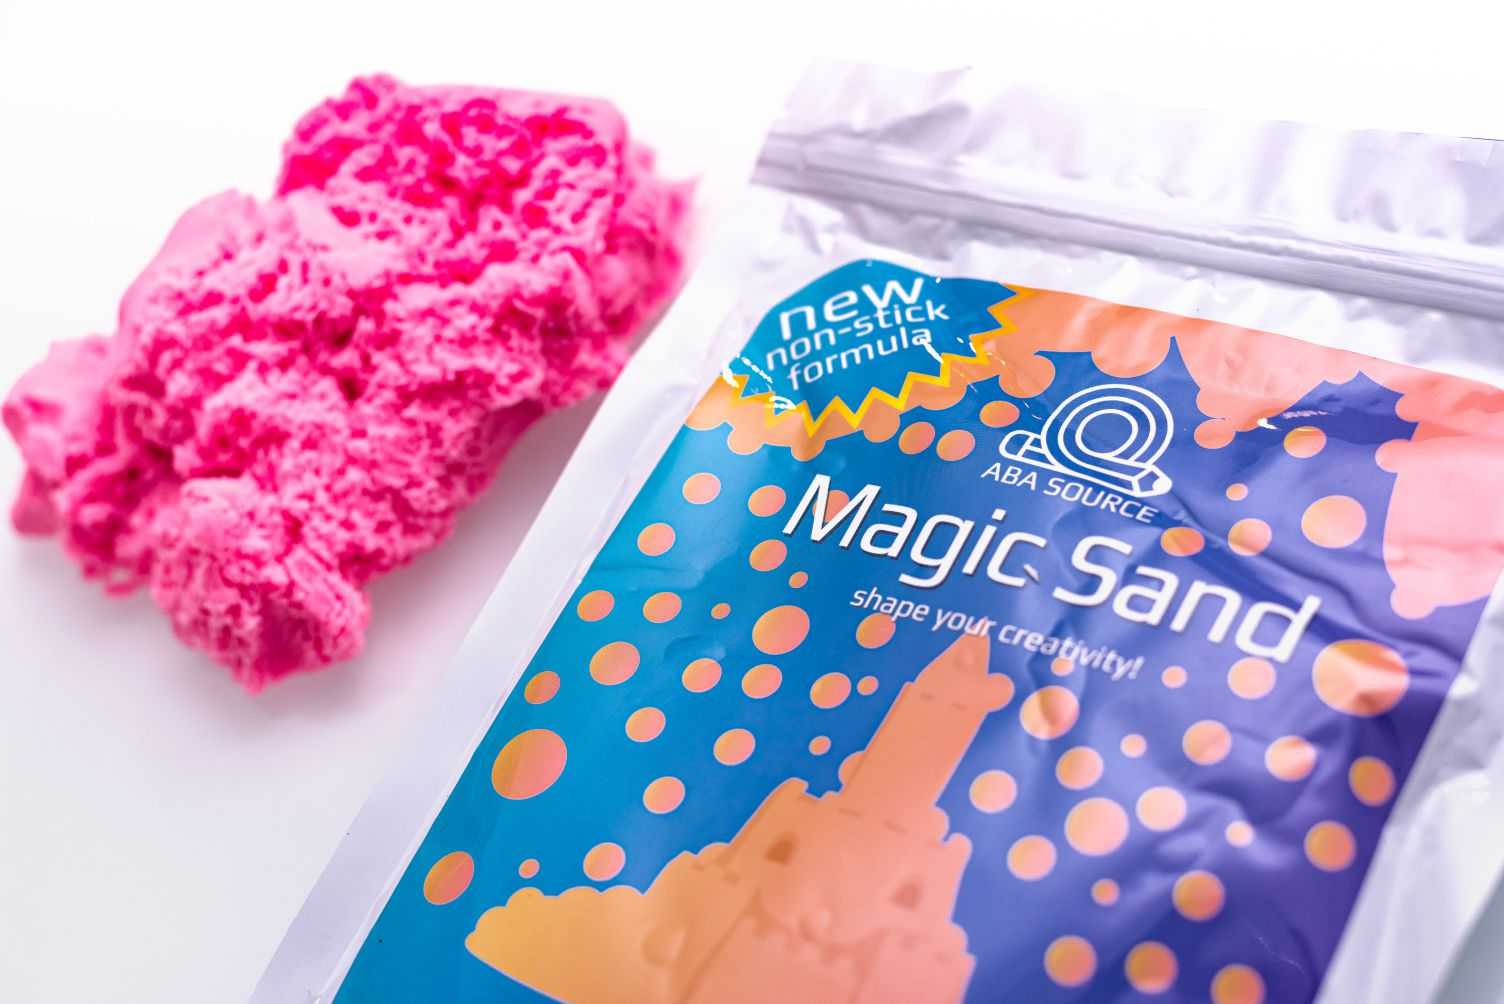 Pink Magic Sand